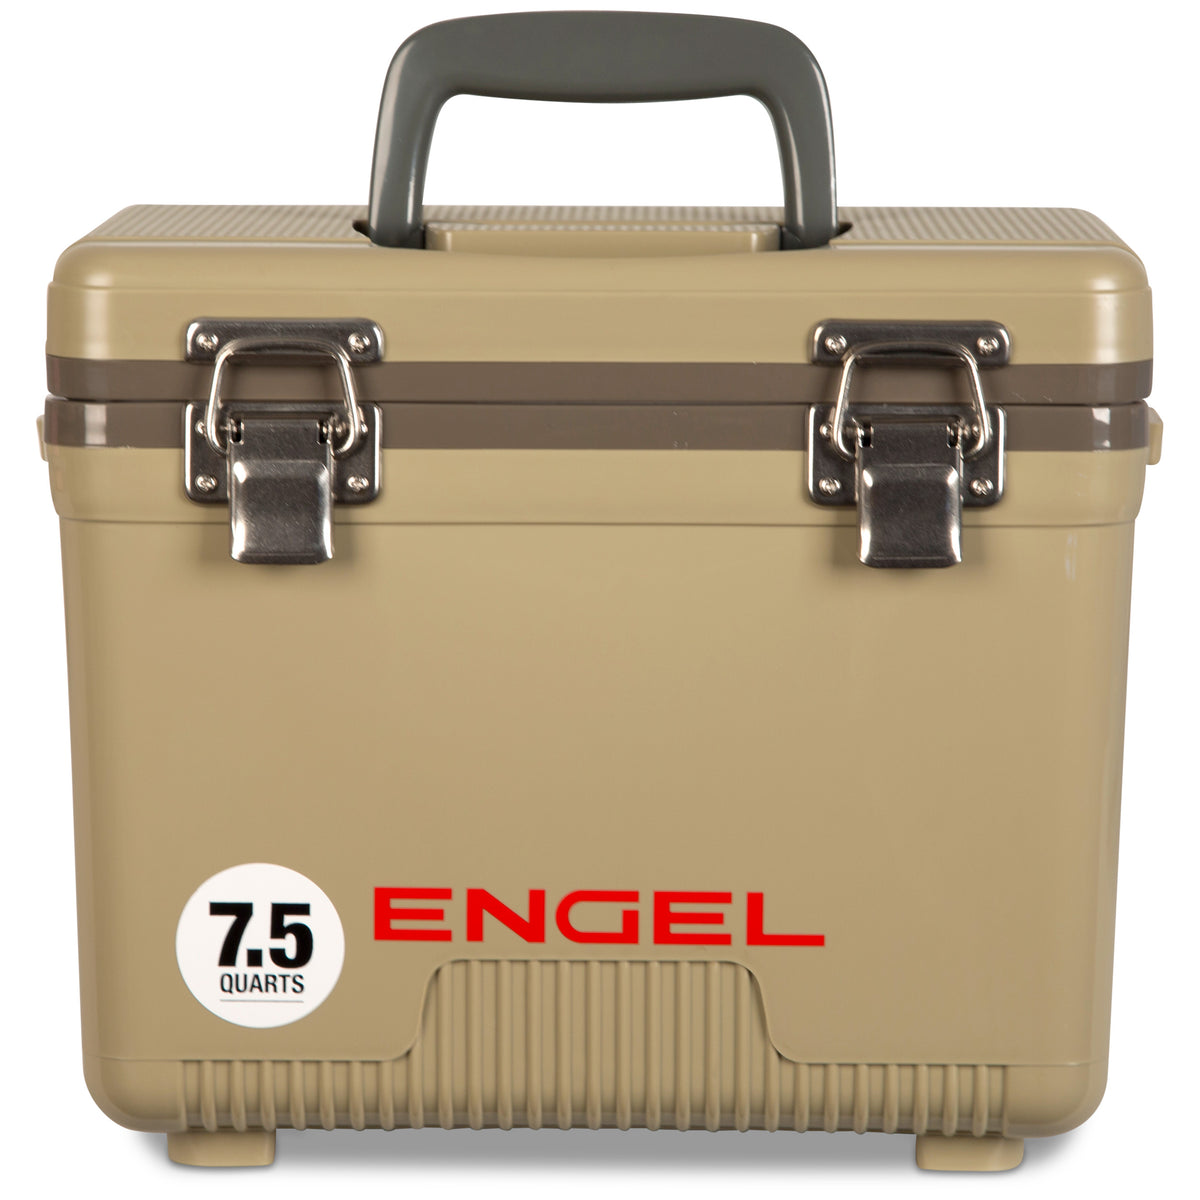 Engel 7.5 Quart Drybox/Cooler - Tan